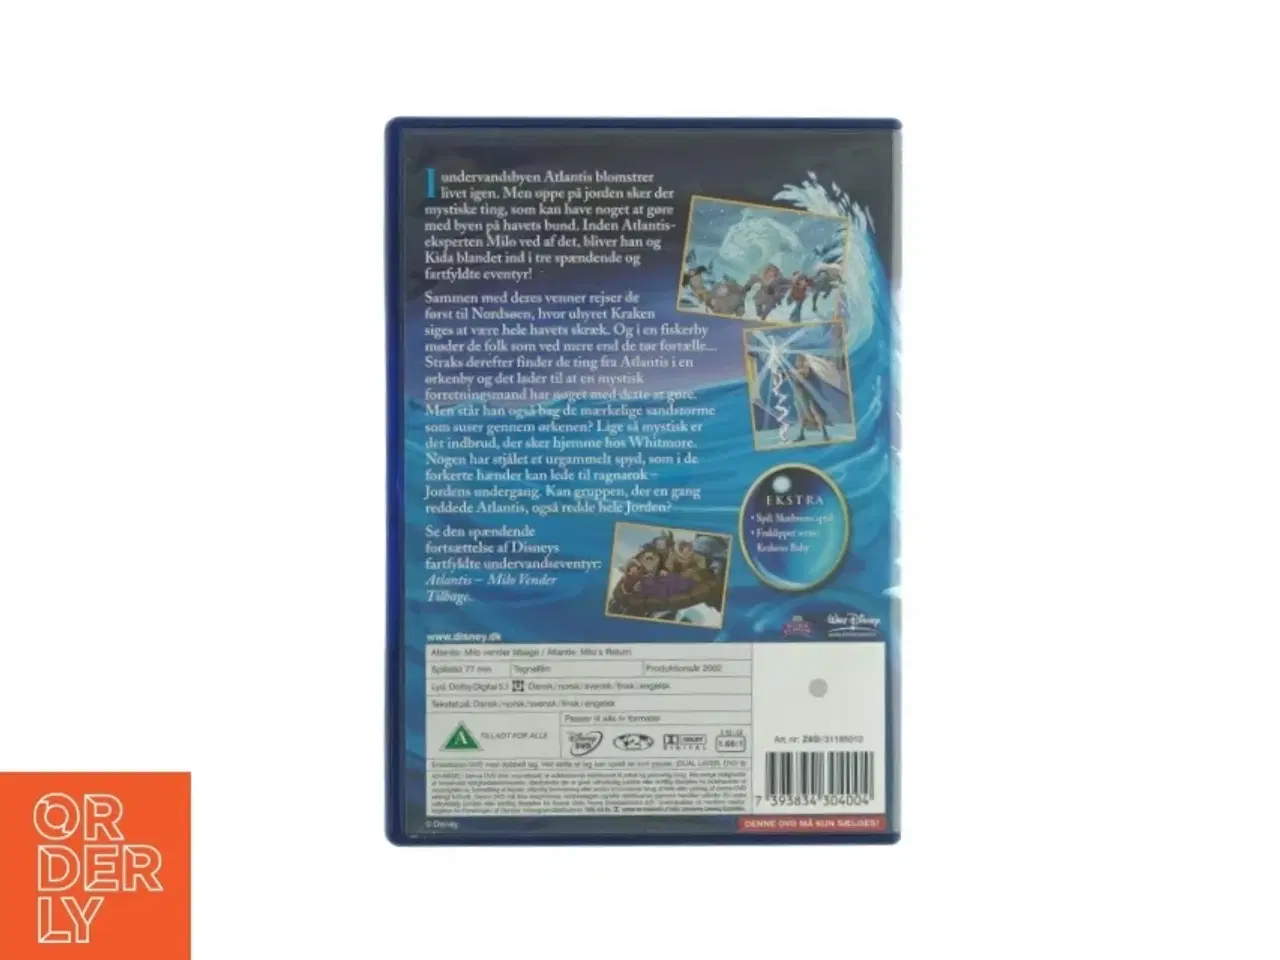 Billede 2 - Atlantis - Mlo vender tilbage (DVD)